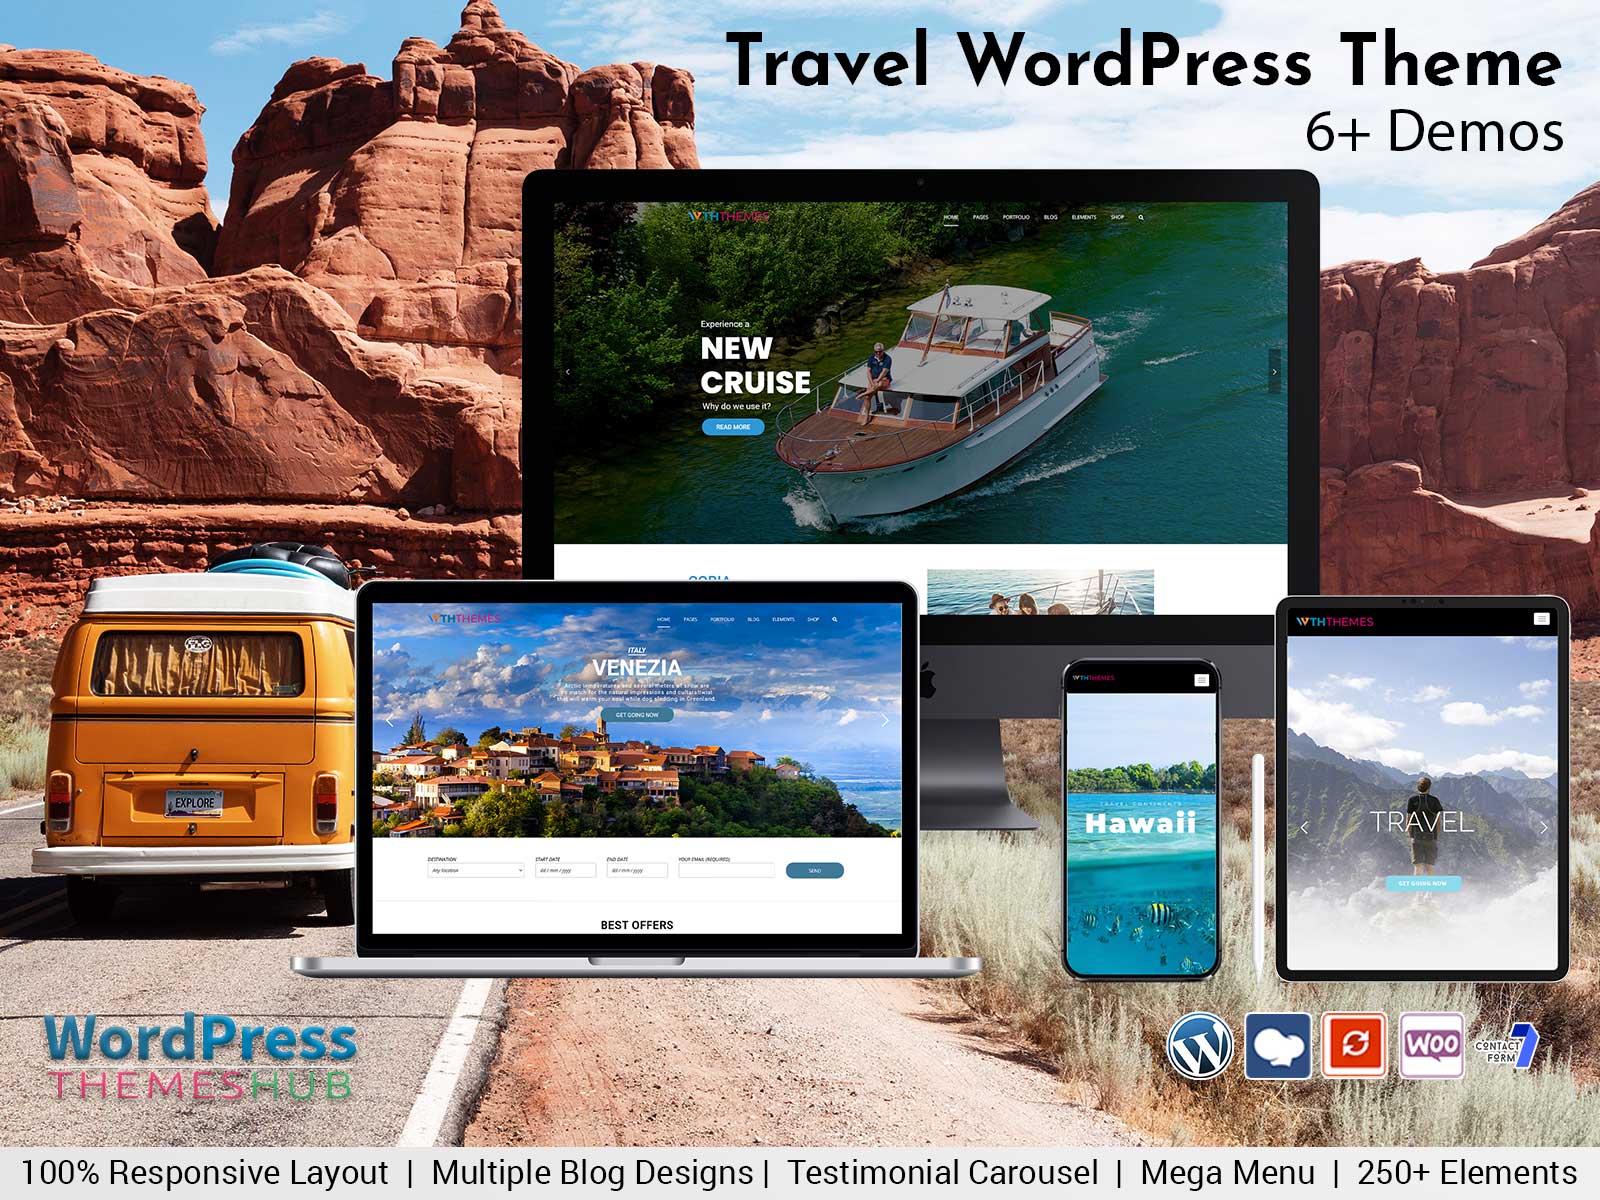 Travel WordPress Theme To Make Travel Website